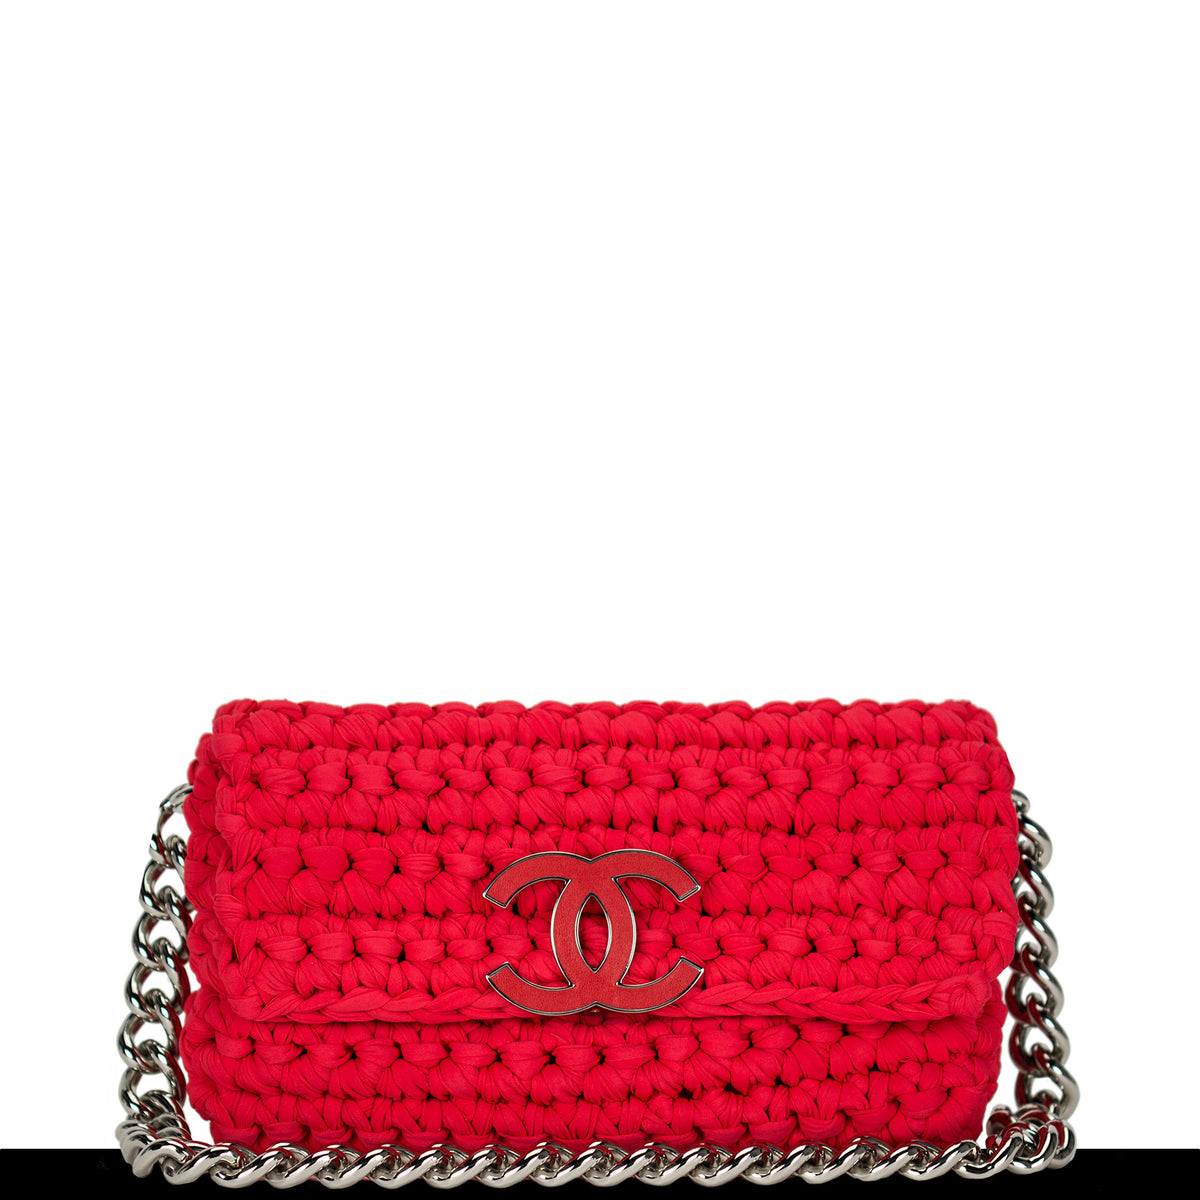 Chanel Cruise 2014 Handbags - Girls Of T.O.